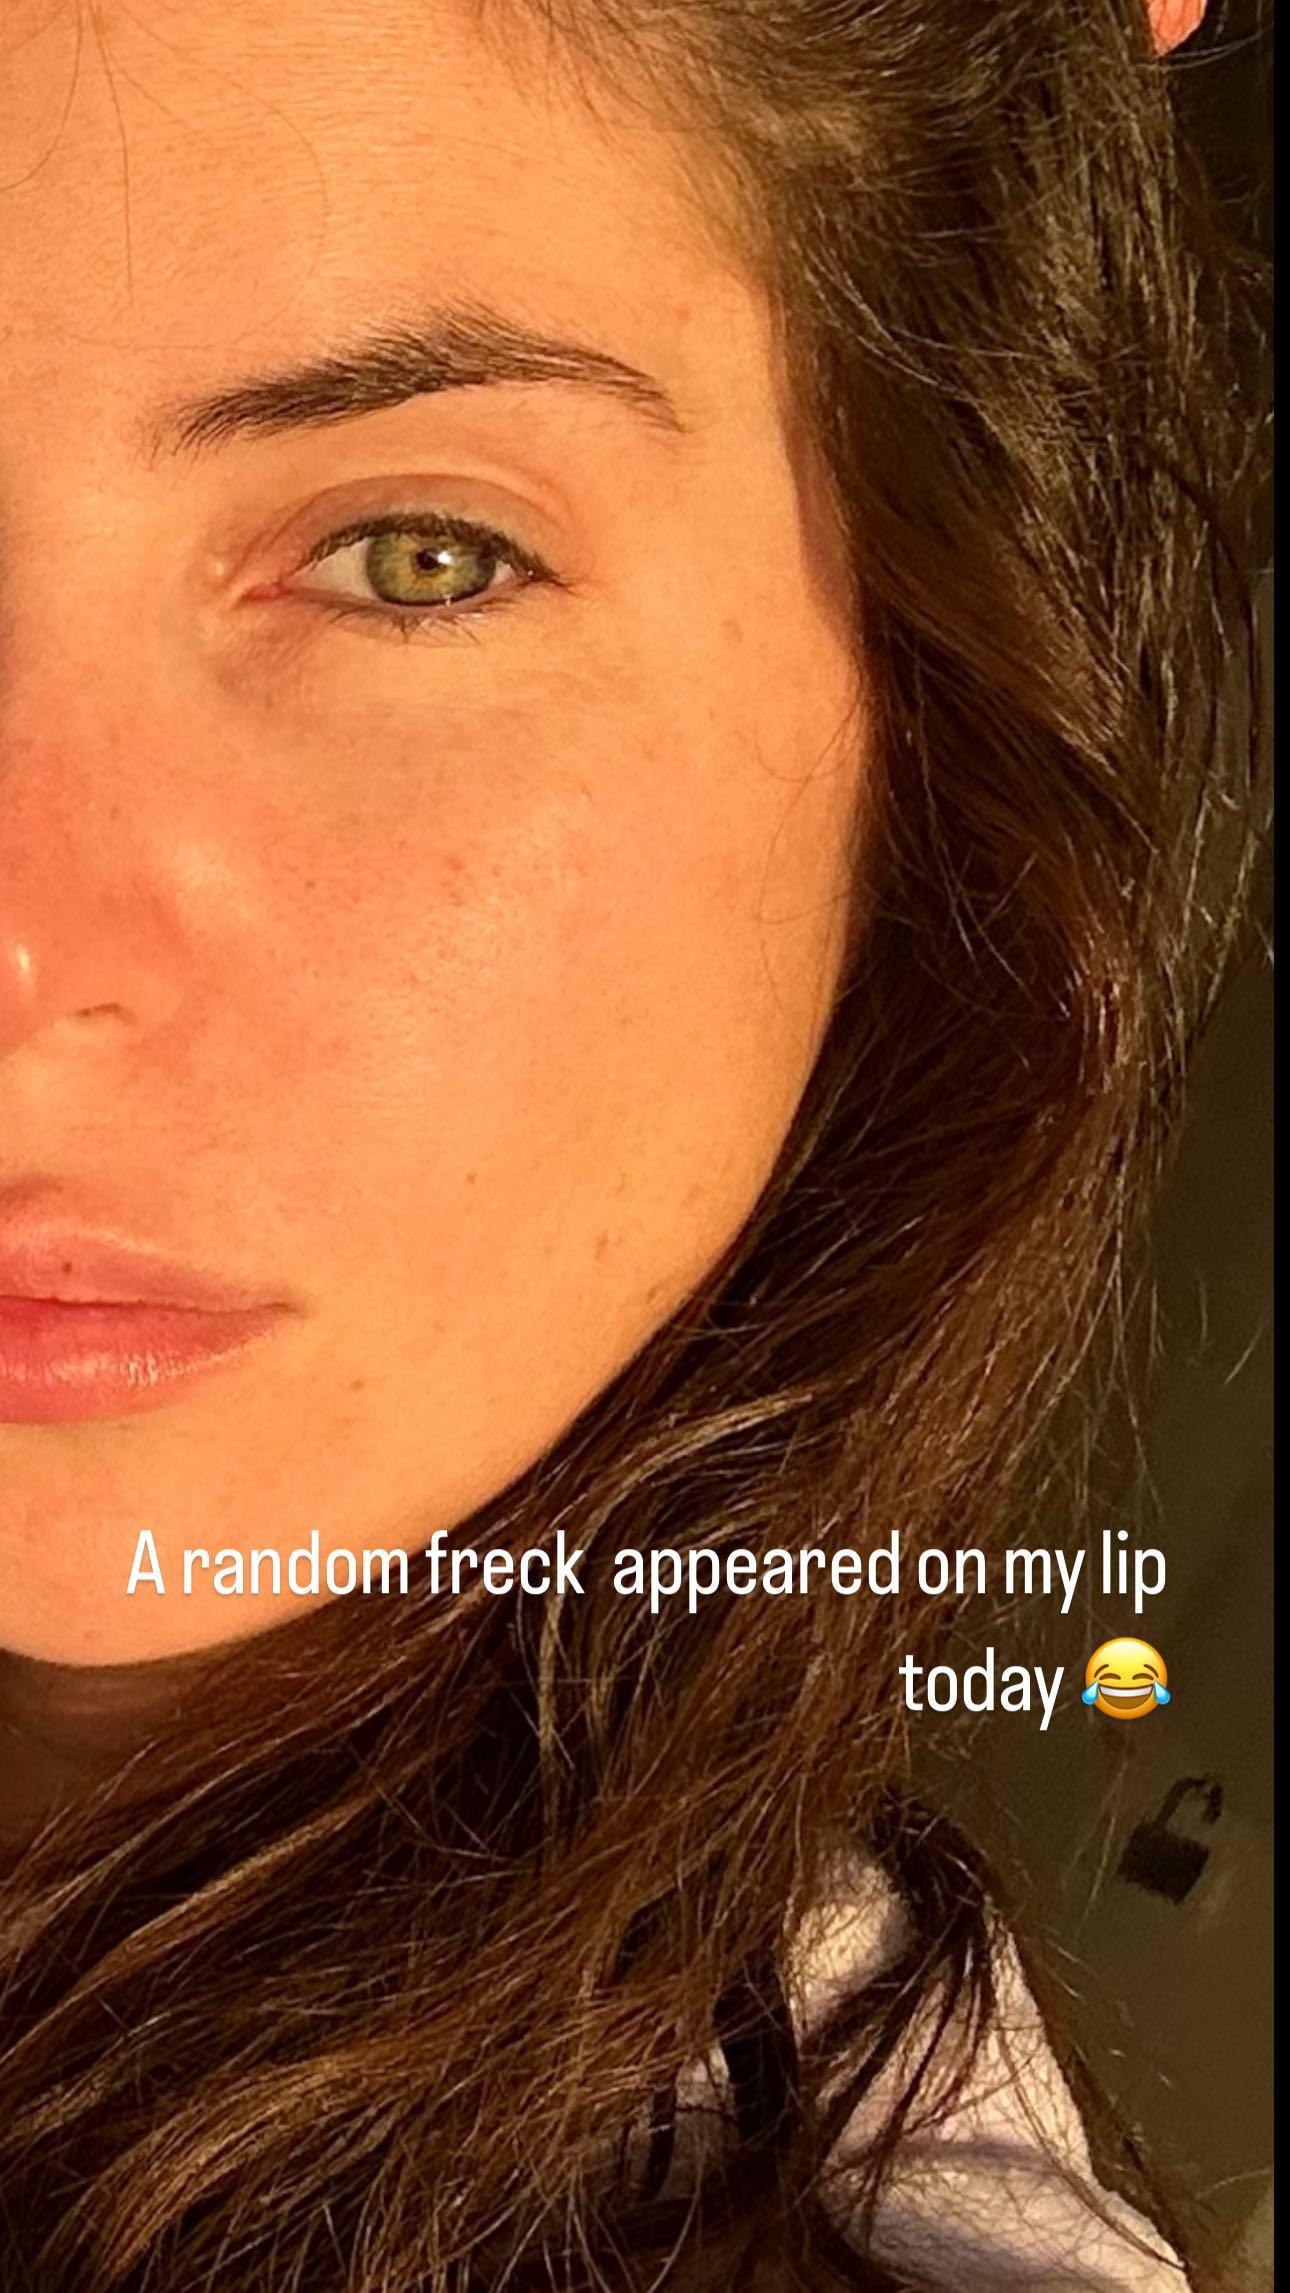 Jen Selter shares a selfie of her freckle